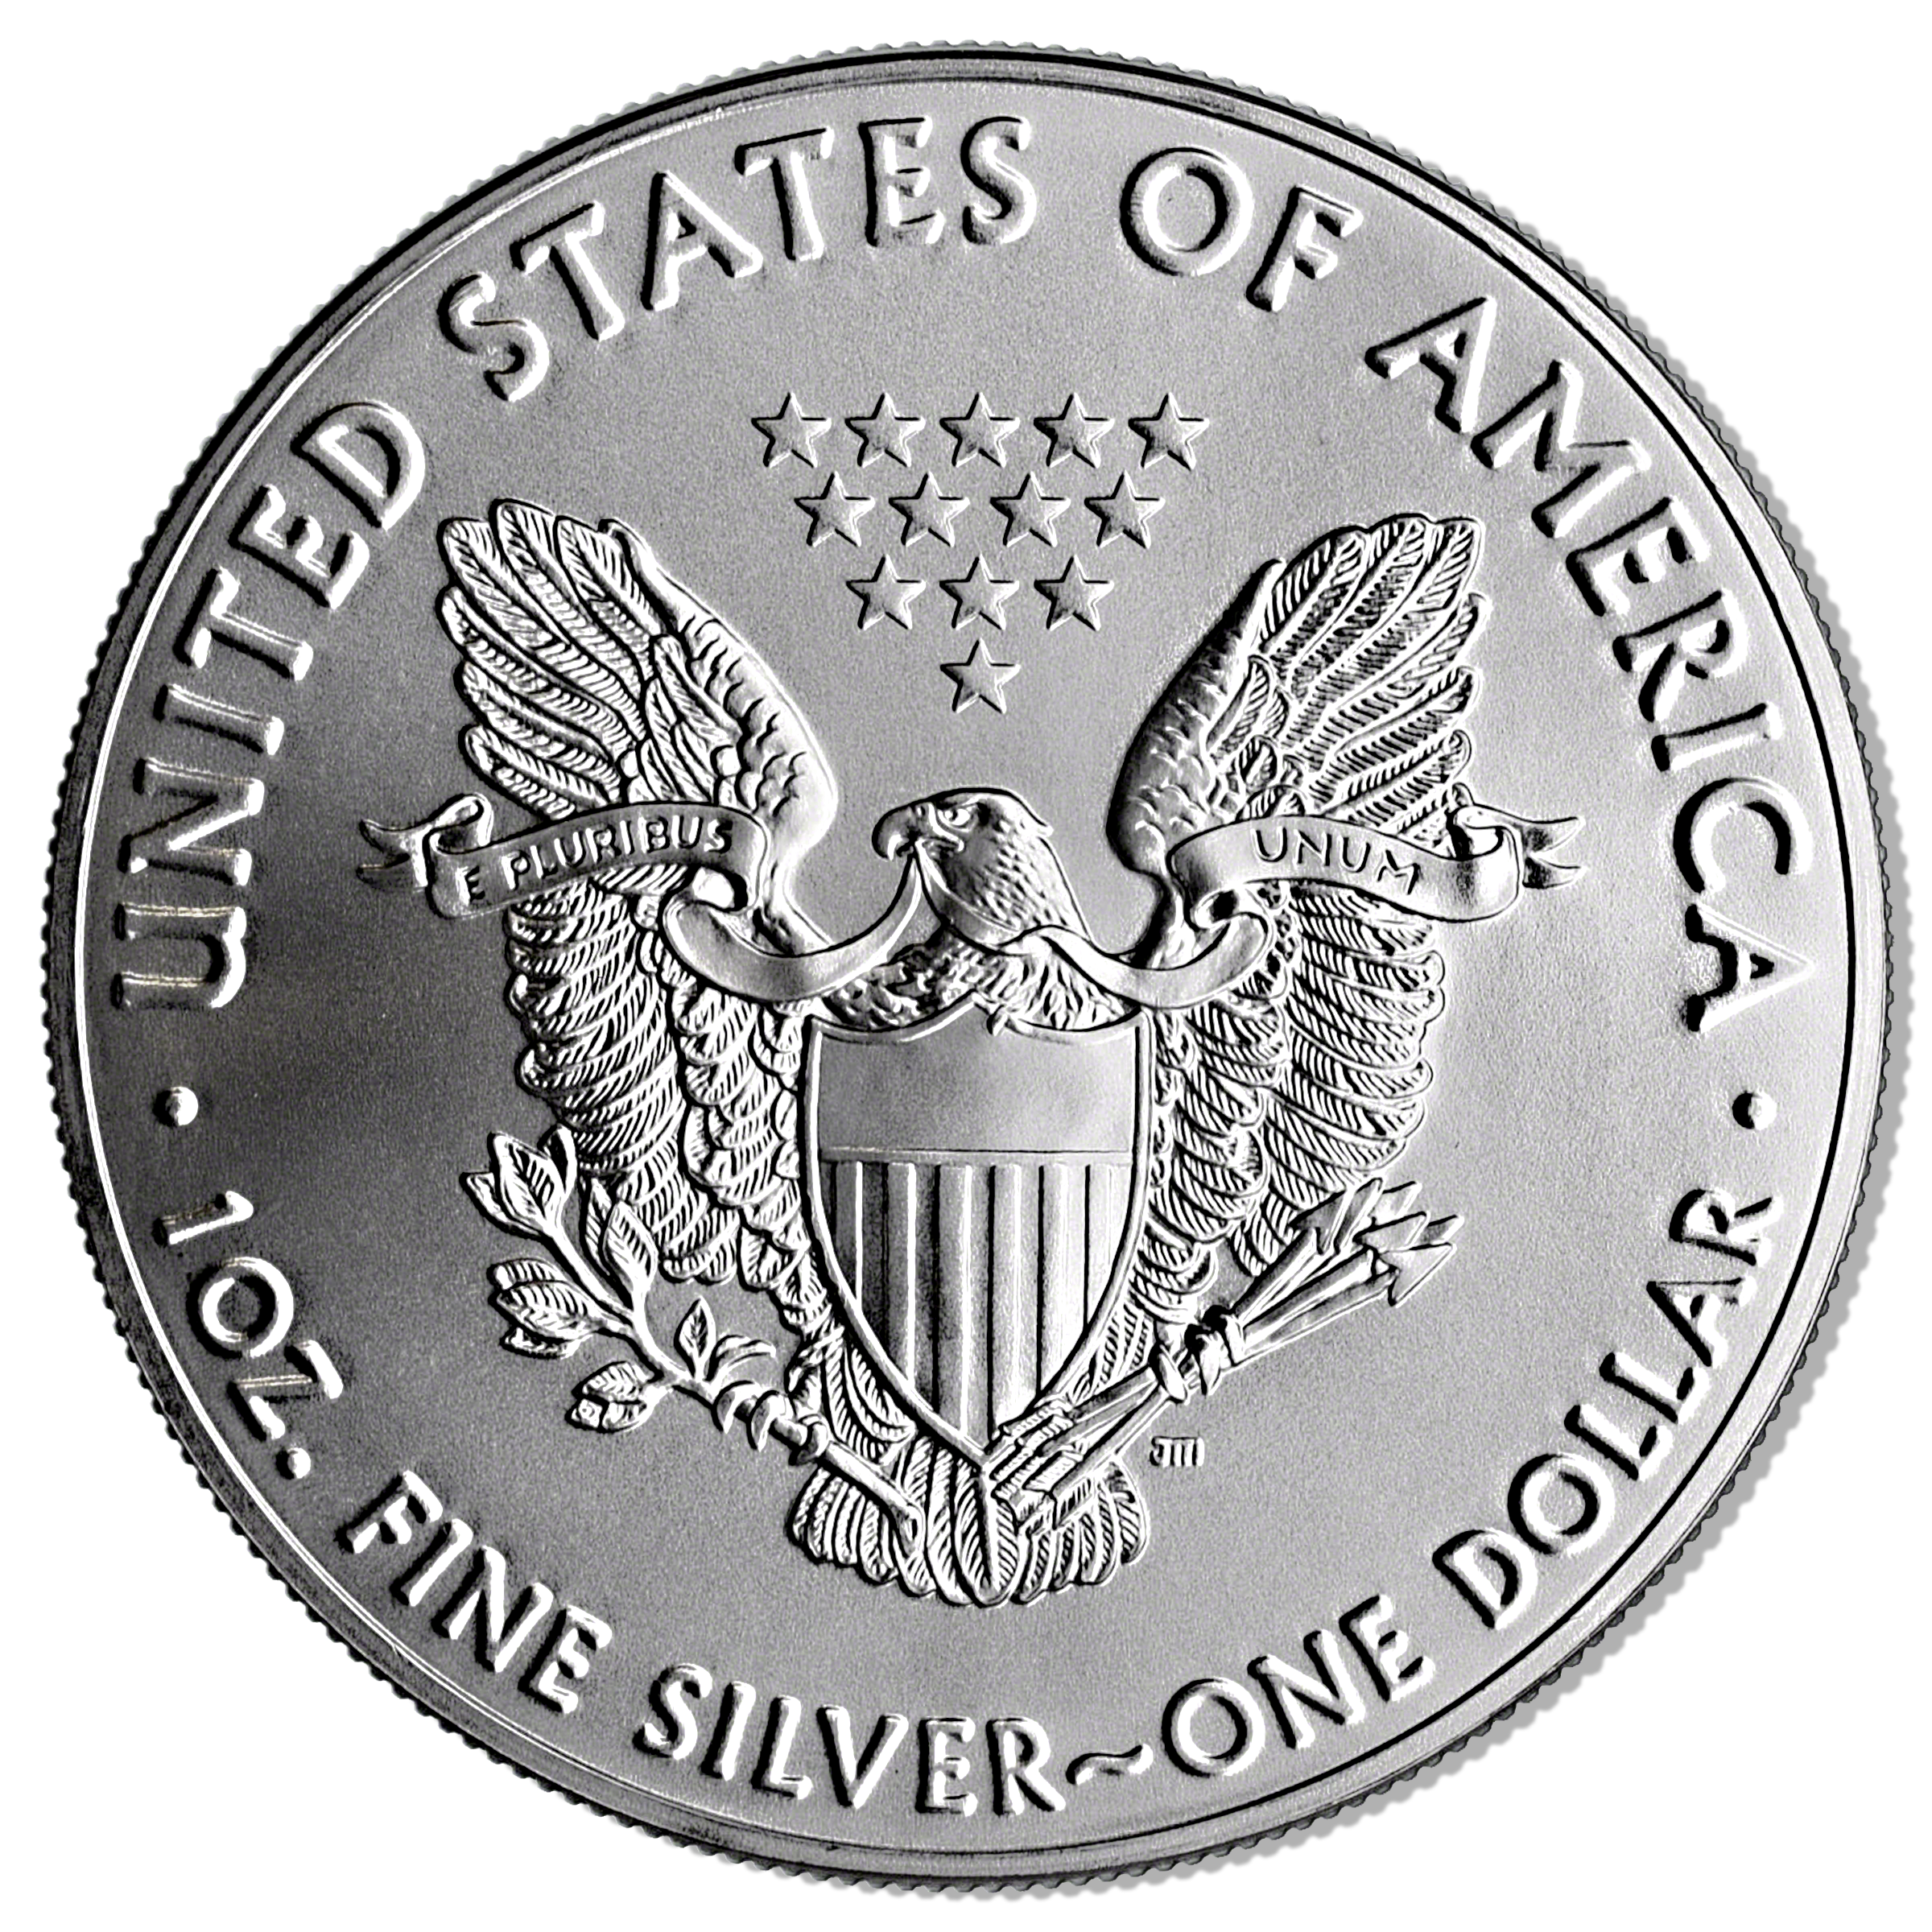 Where To Buy Silver Eagle Coins Near Me - blackehhlurbb